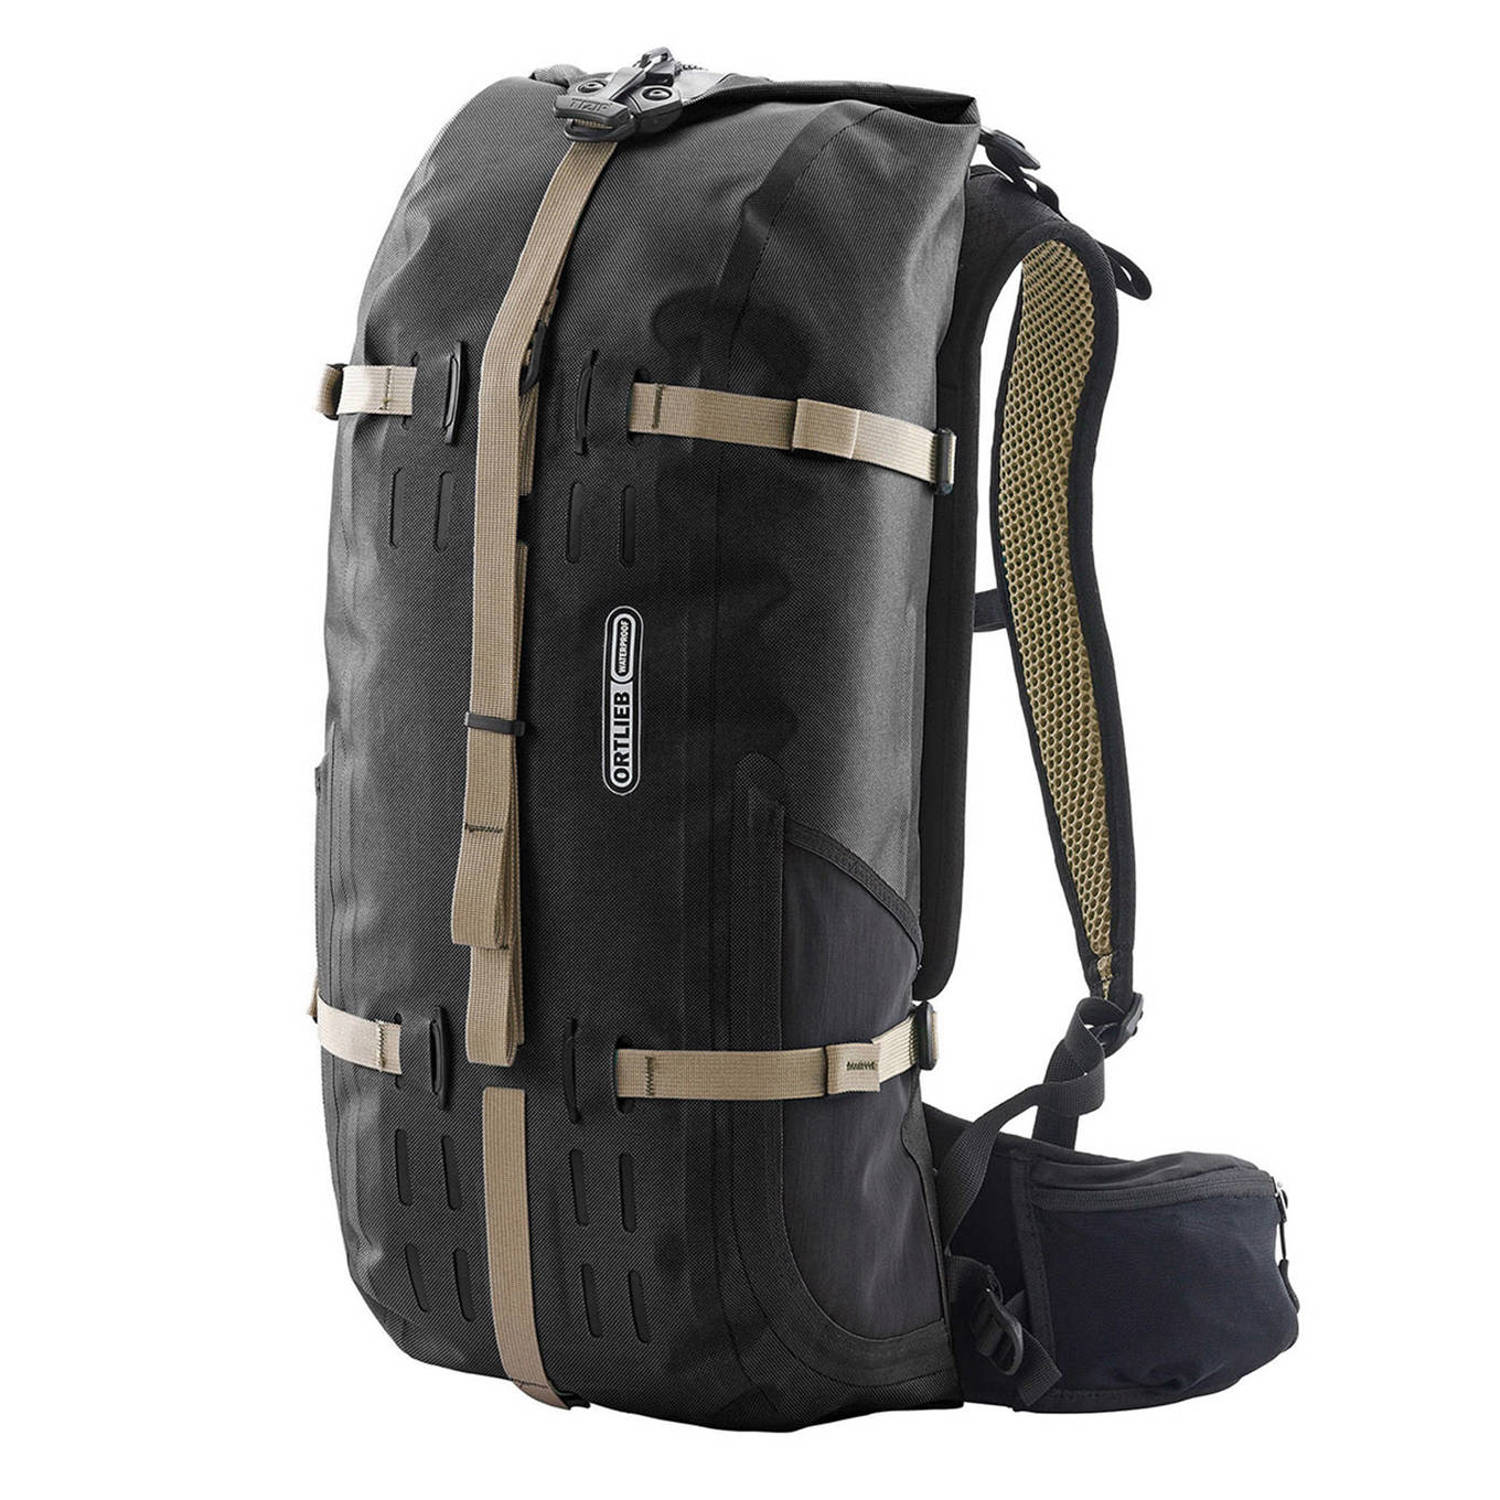 Ortlieb backpack Atrack 25L Daypack zwart